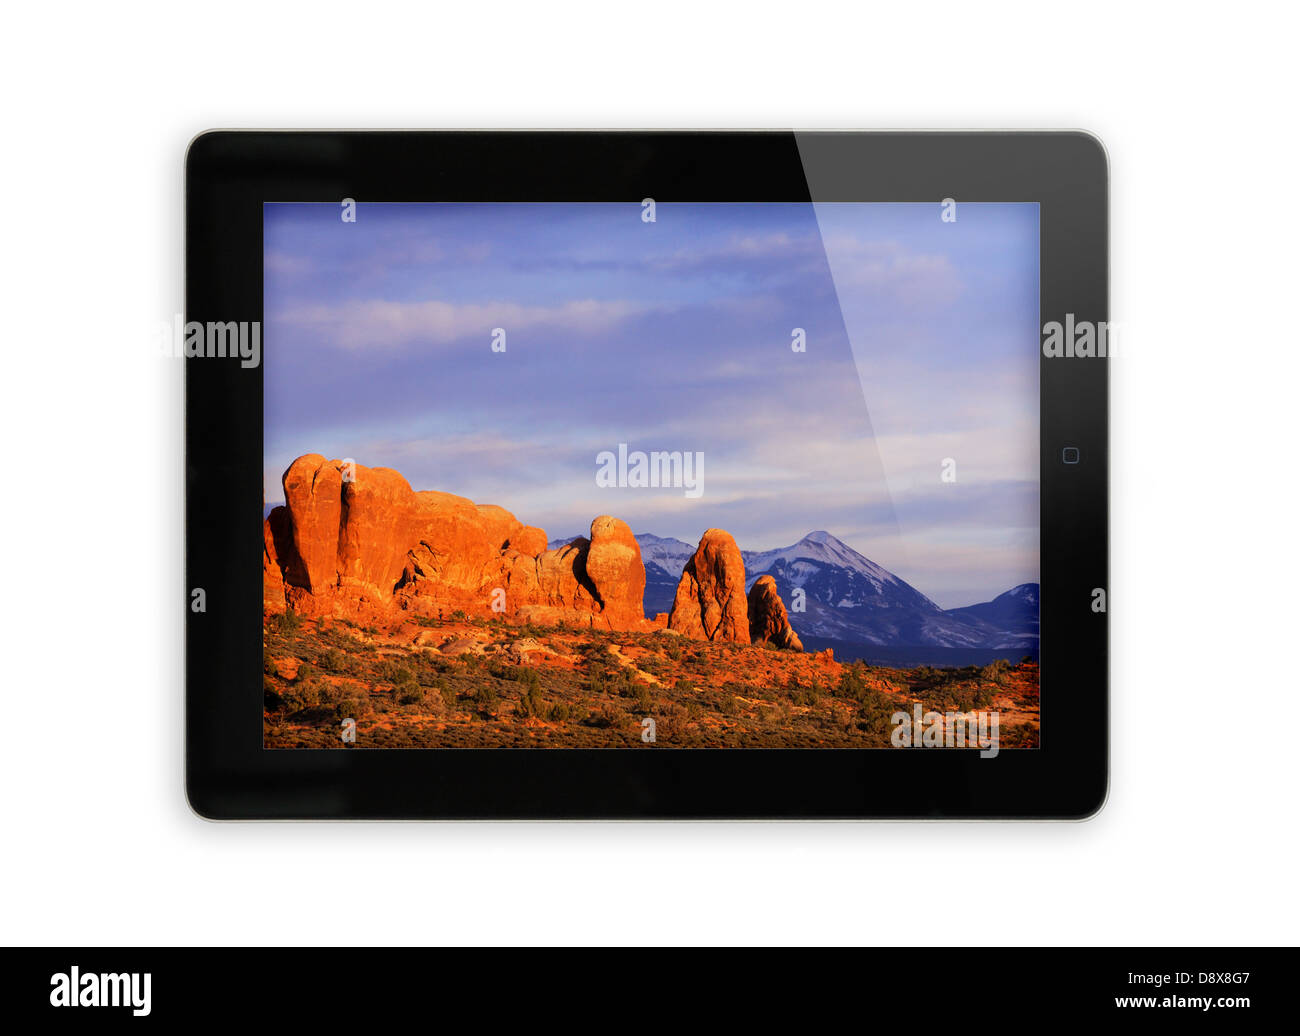 iPad screen showing photo Stock Photo